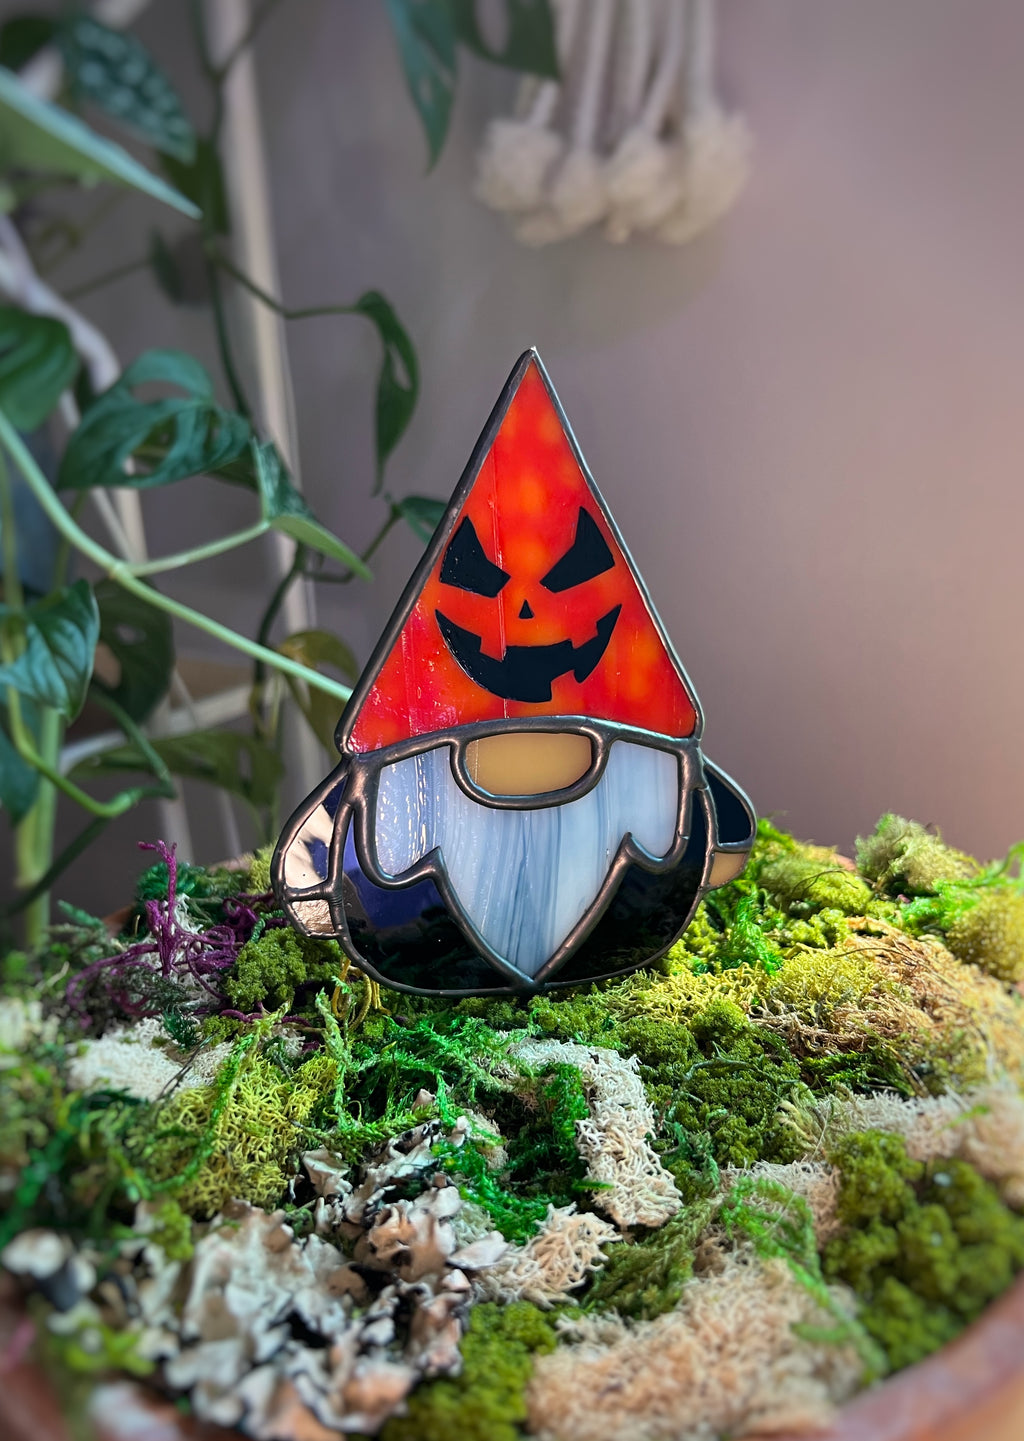 Jack-o-lantern gnome